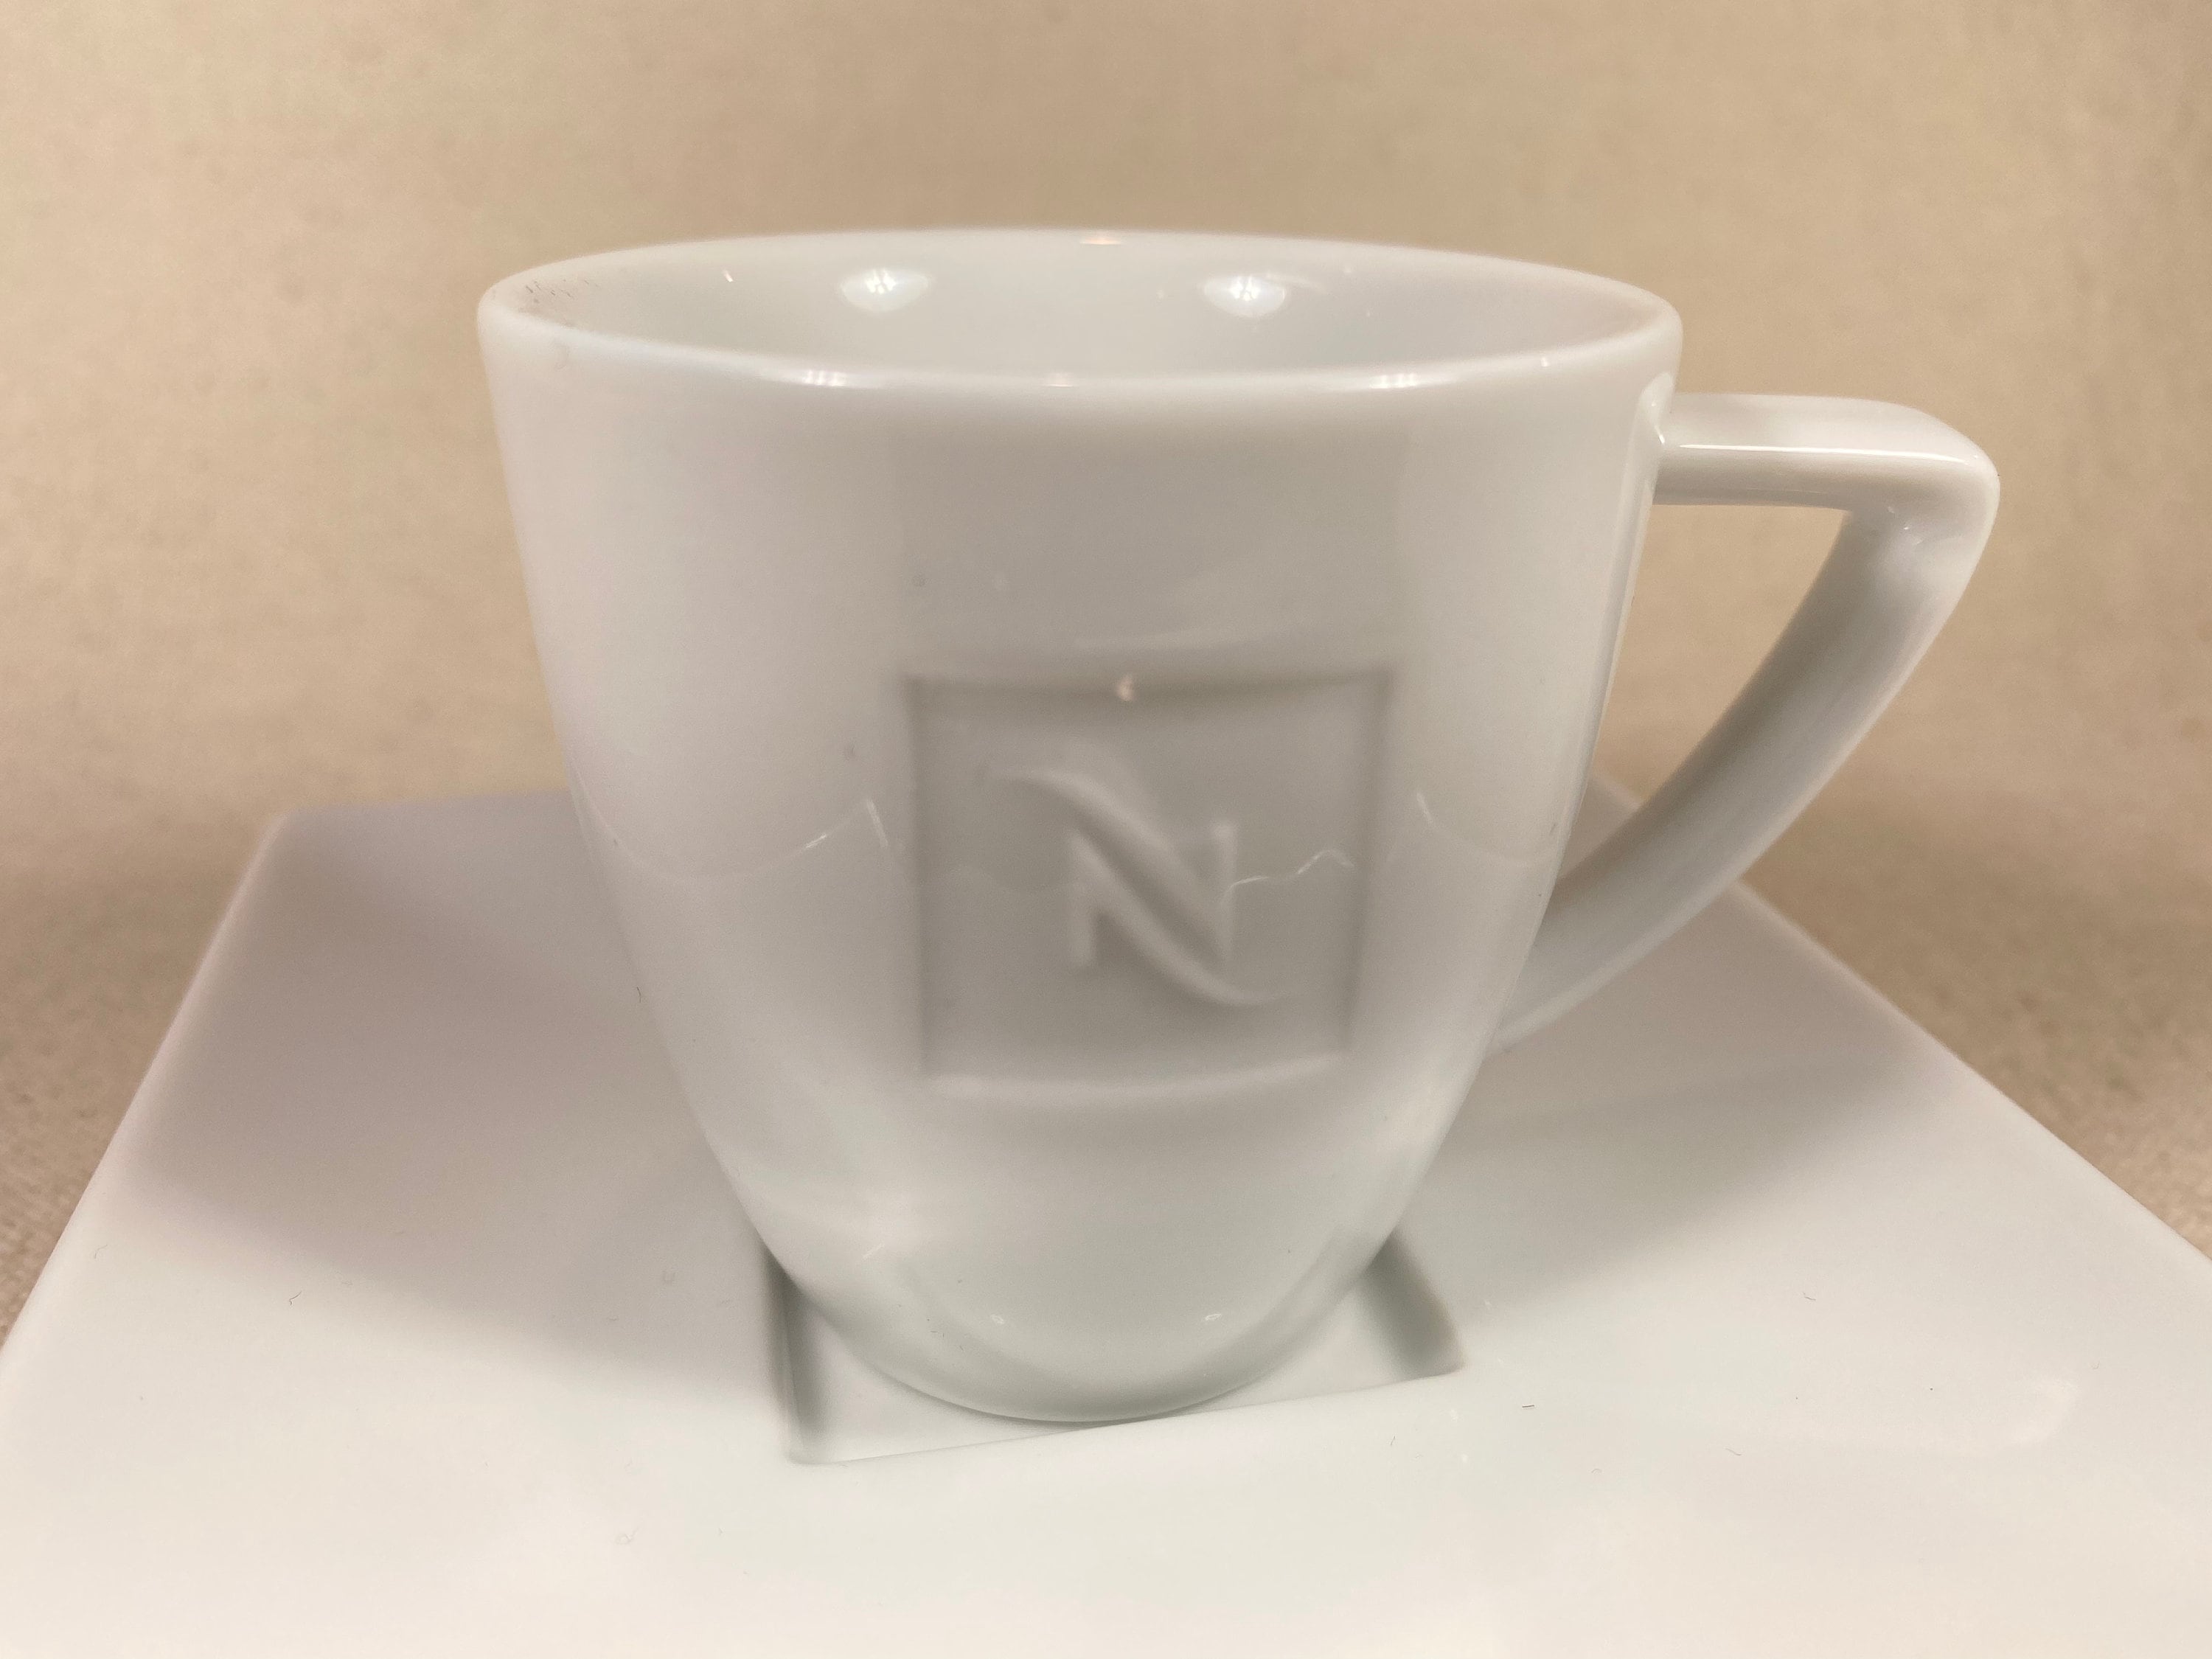 Vintage Nescafé White Embossed Porcelain Demitasse Espresso Cup & Square Saucer Made in Portugal